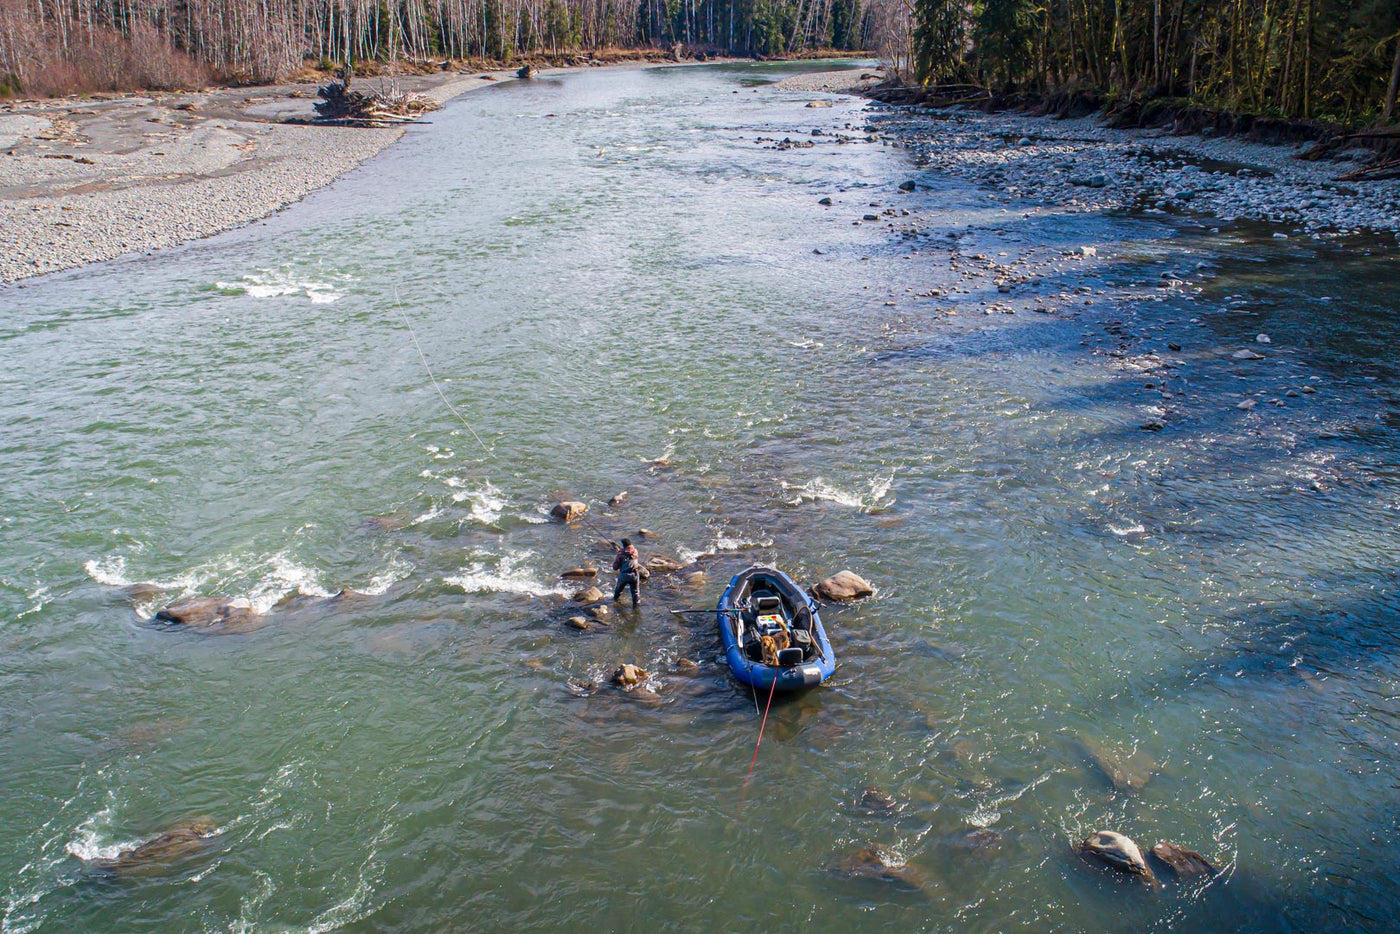 Hoh River Fly Fishing For Salmon, Steelhead